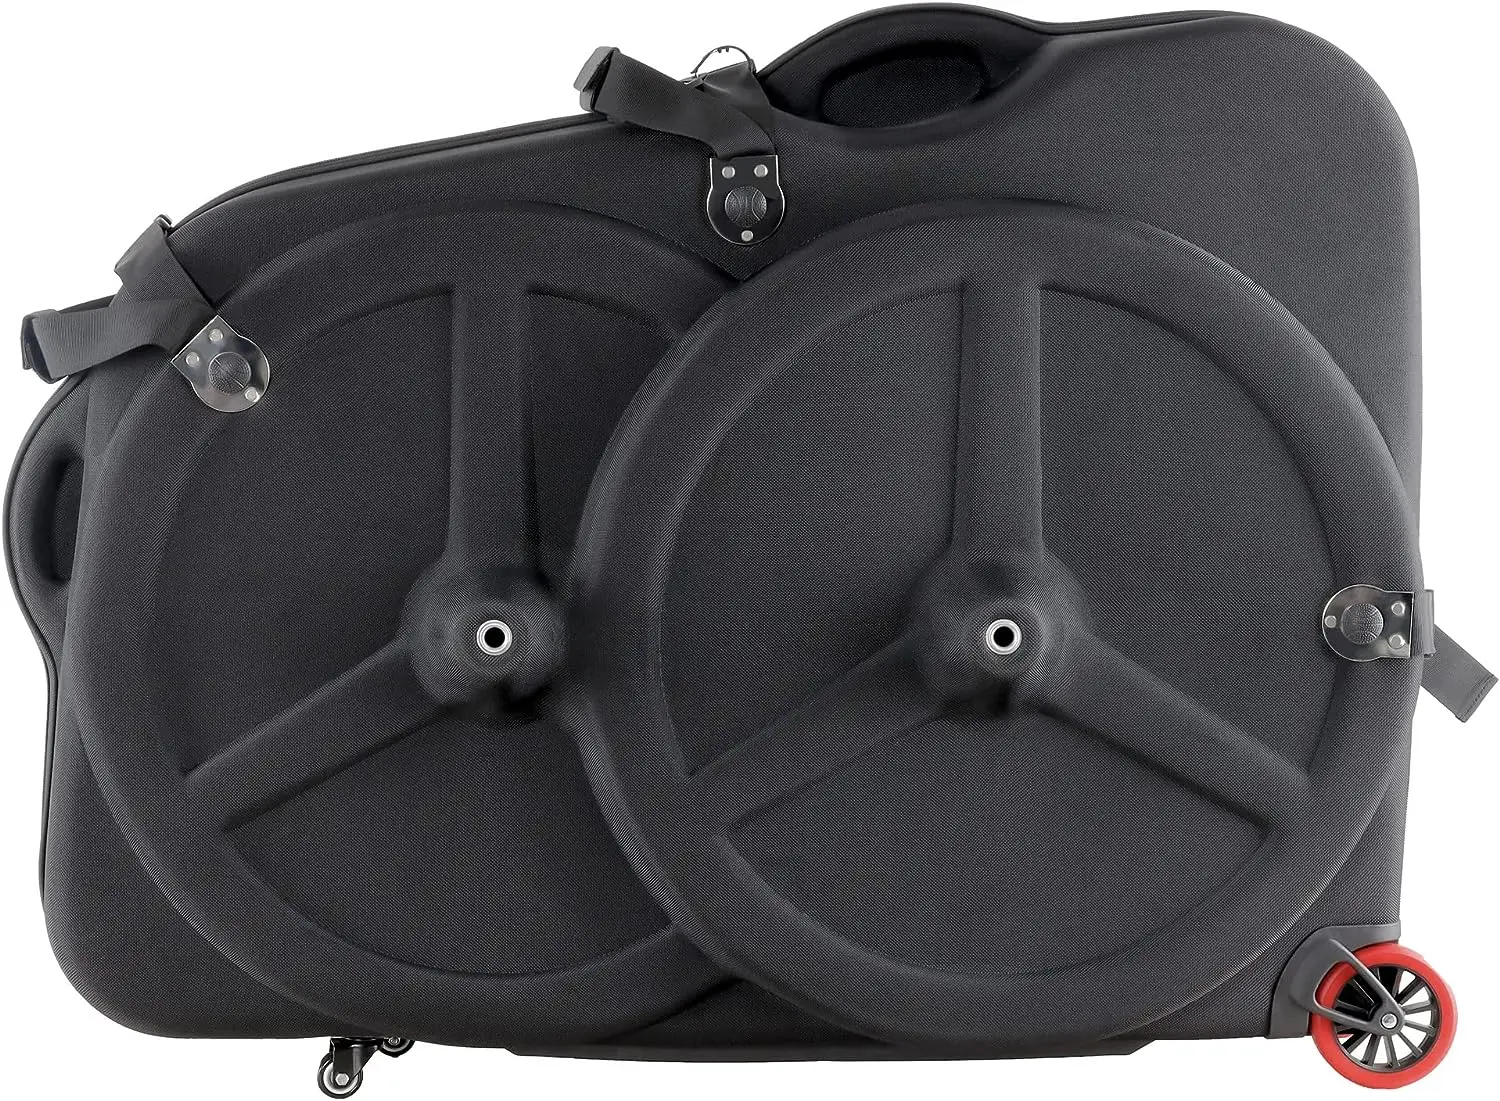 

Travel Case - 700c Bikes - Bicycle Air Flights Travel Hard Case Box Bag EVA Lightweight & Durable with TSA Lock - Great for Vse